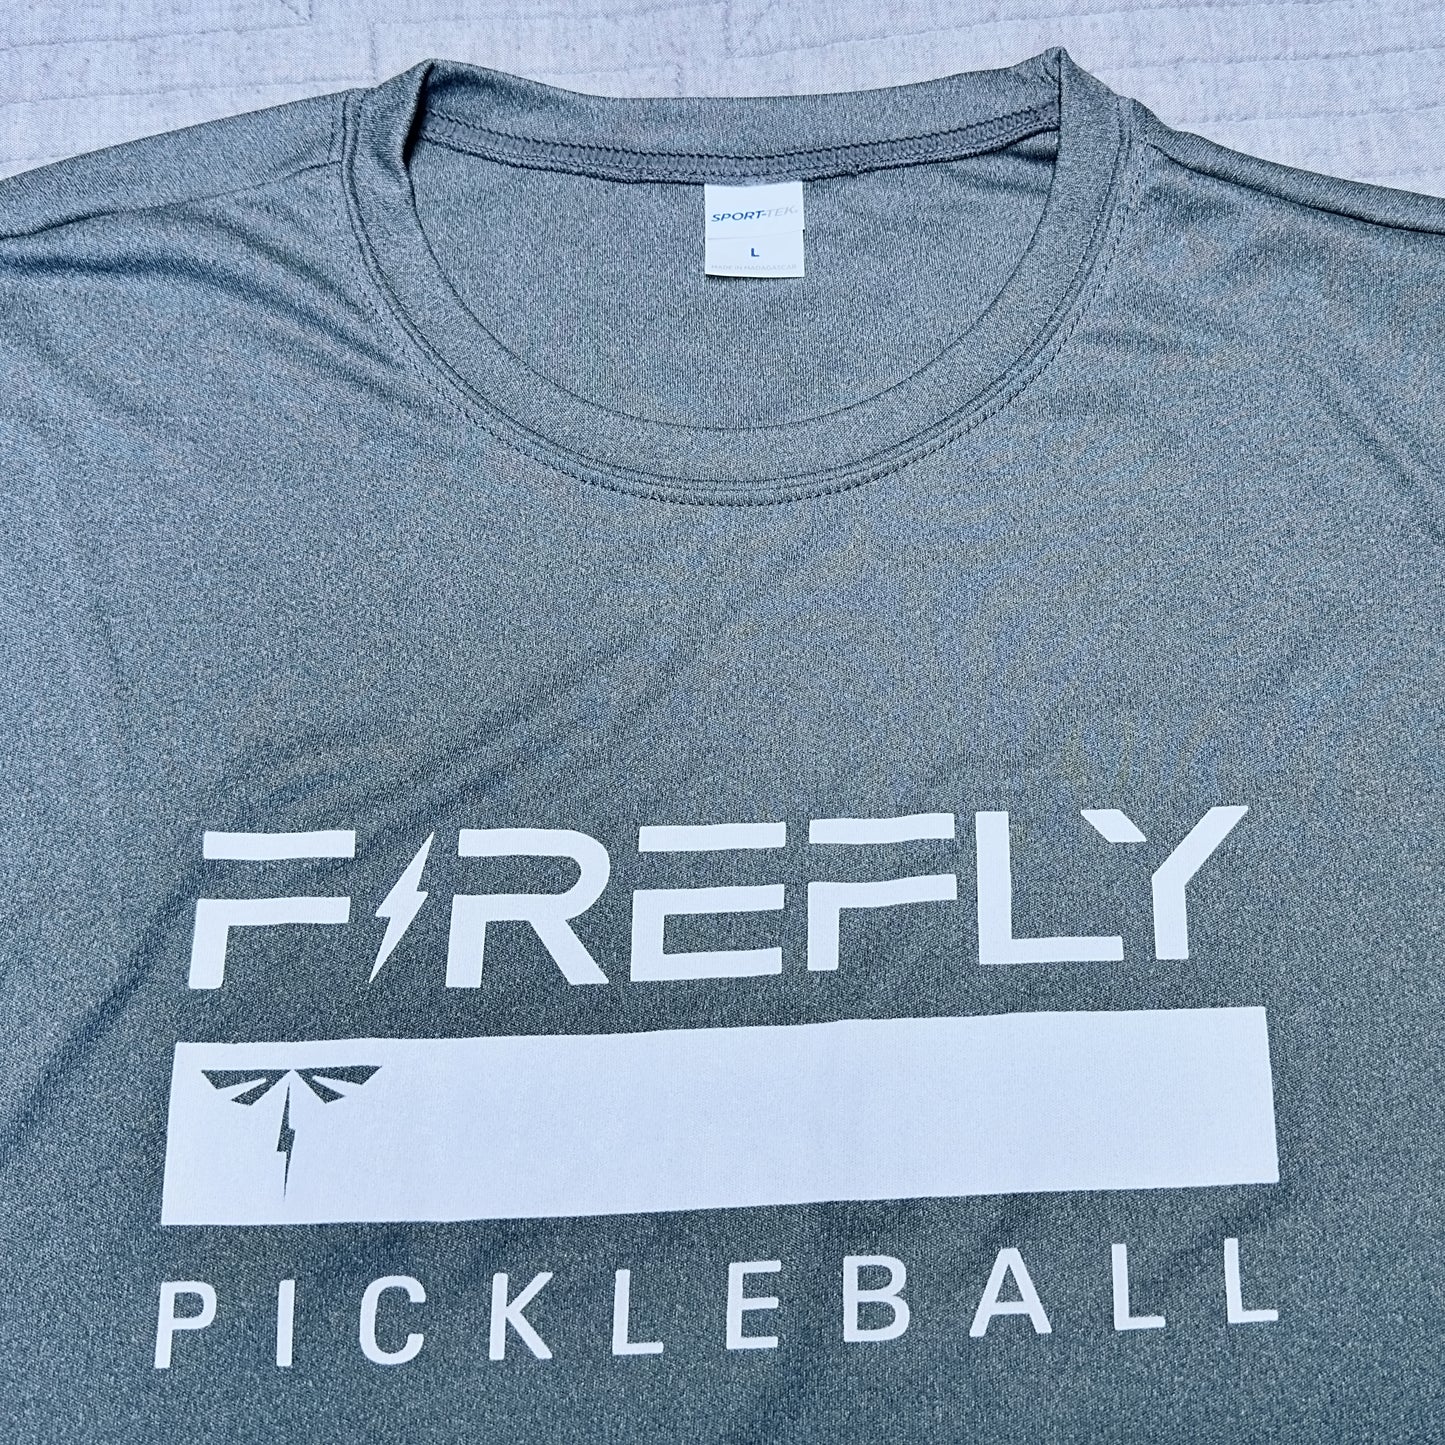 Firefly Bar Logo Dri-Fit Performance T-shirt